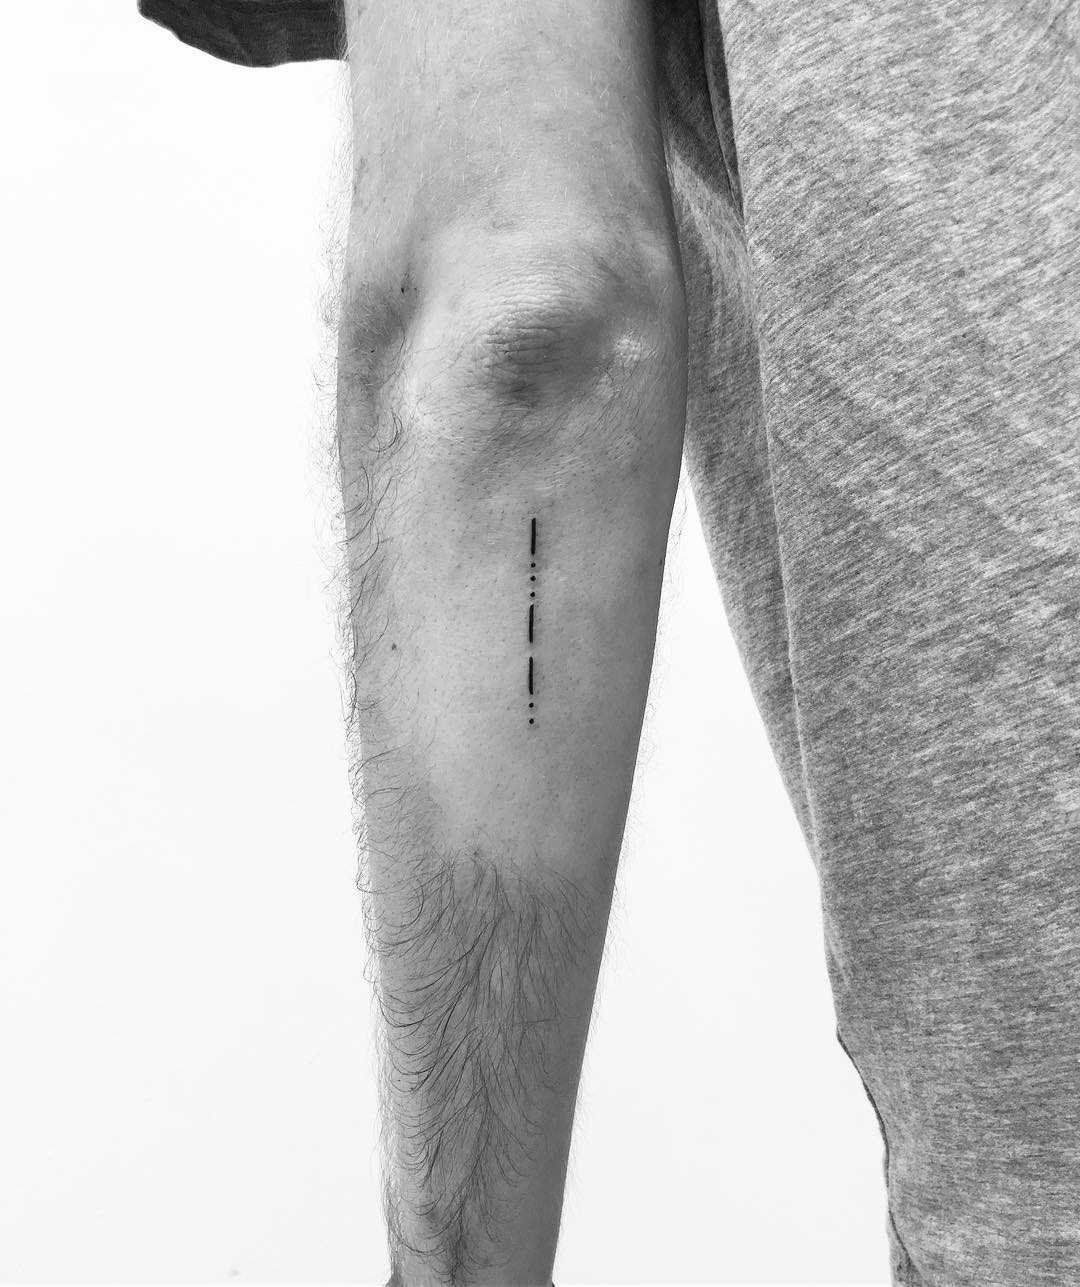 Morse code tattoo by Philipp Eid